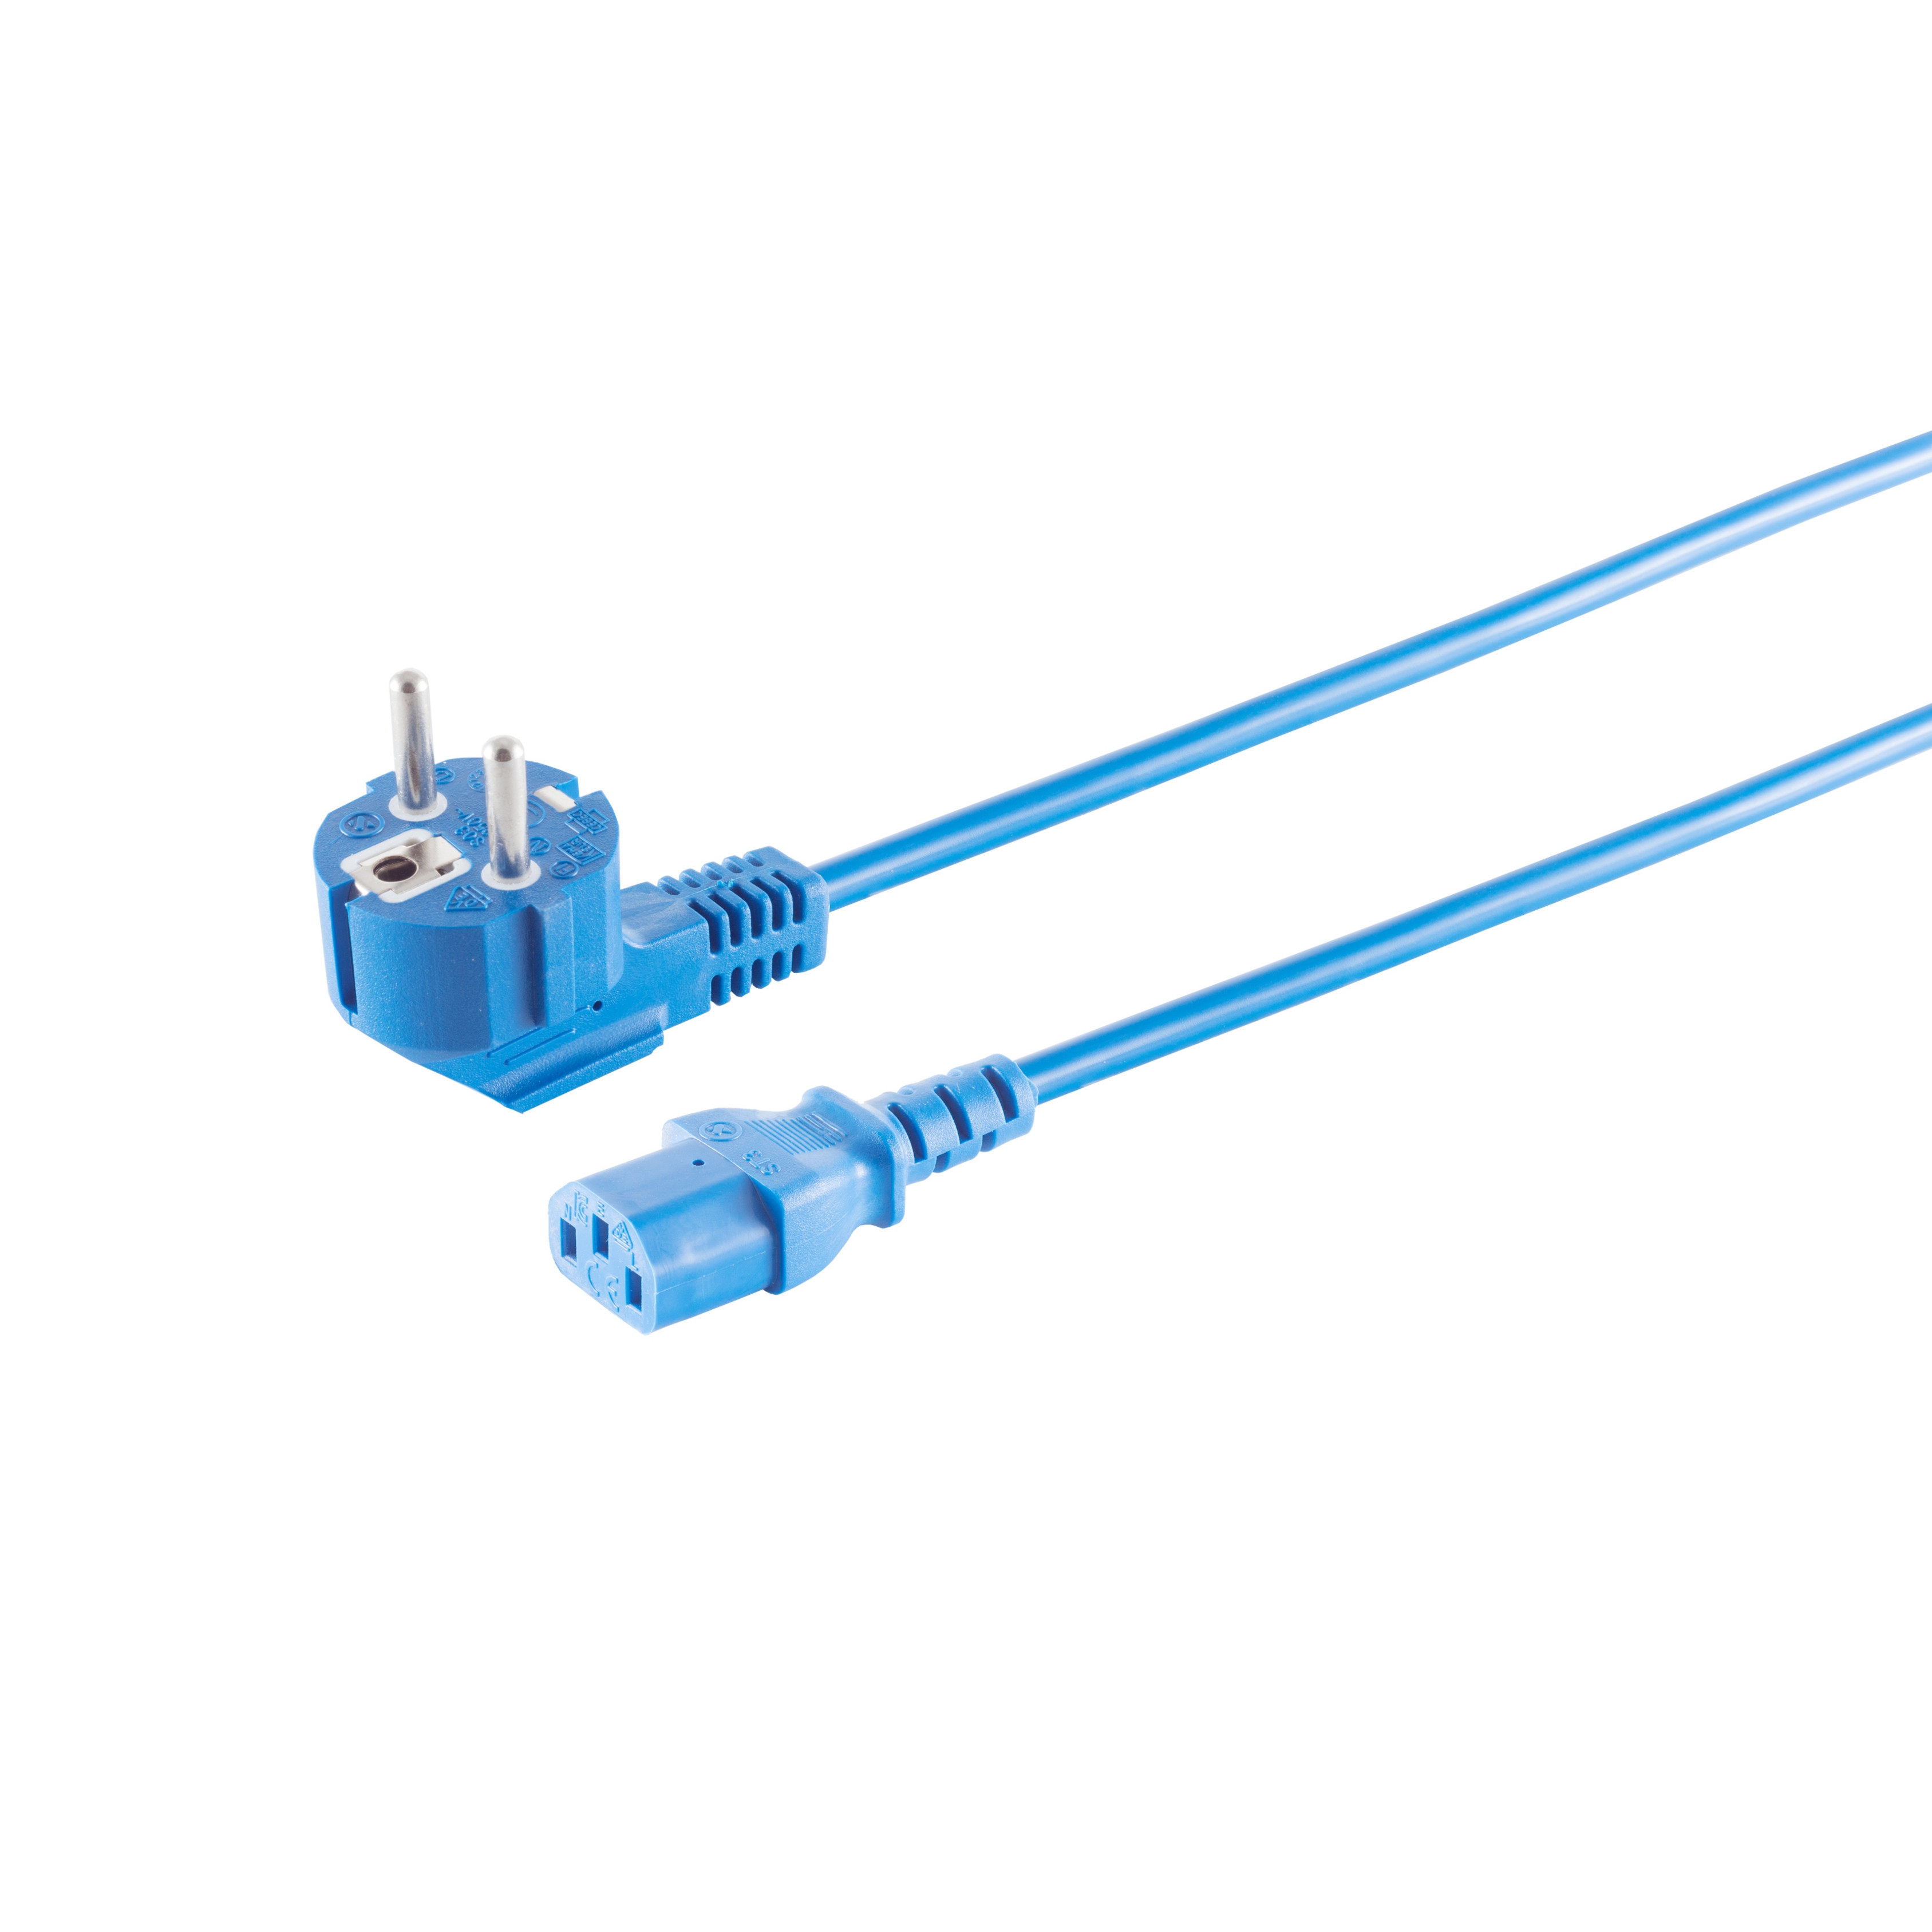 S/CONN MAXIMUM CONNECTIVITY Schutzkontakt 90°/Kaltgerätebuchse Netzanschlusskabel 3m blau